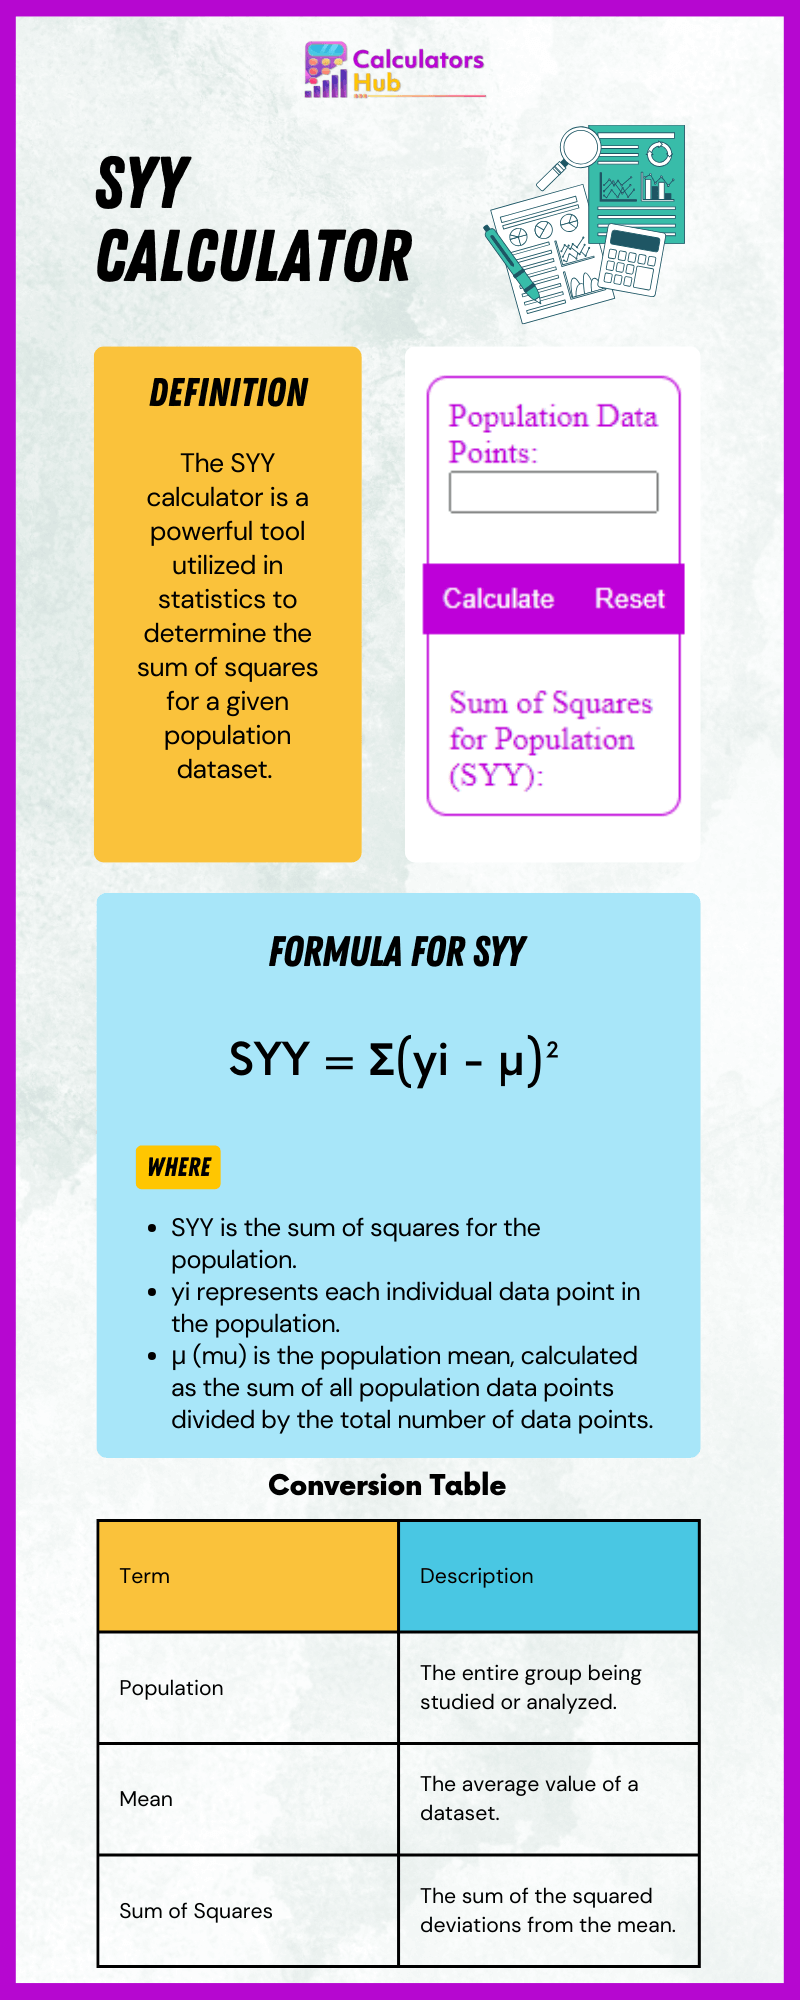 SYY Calculator